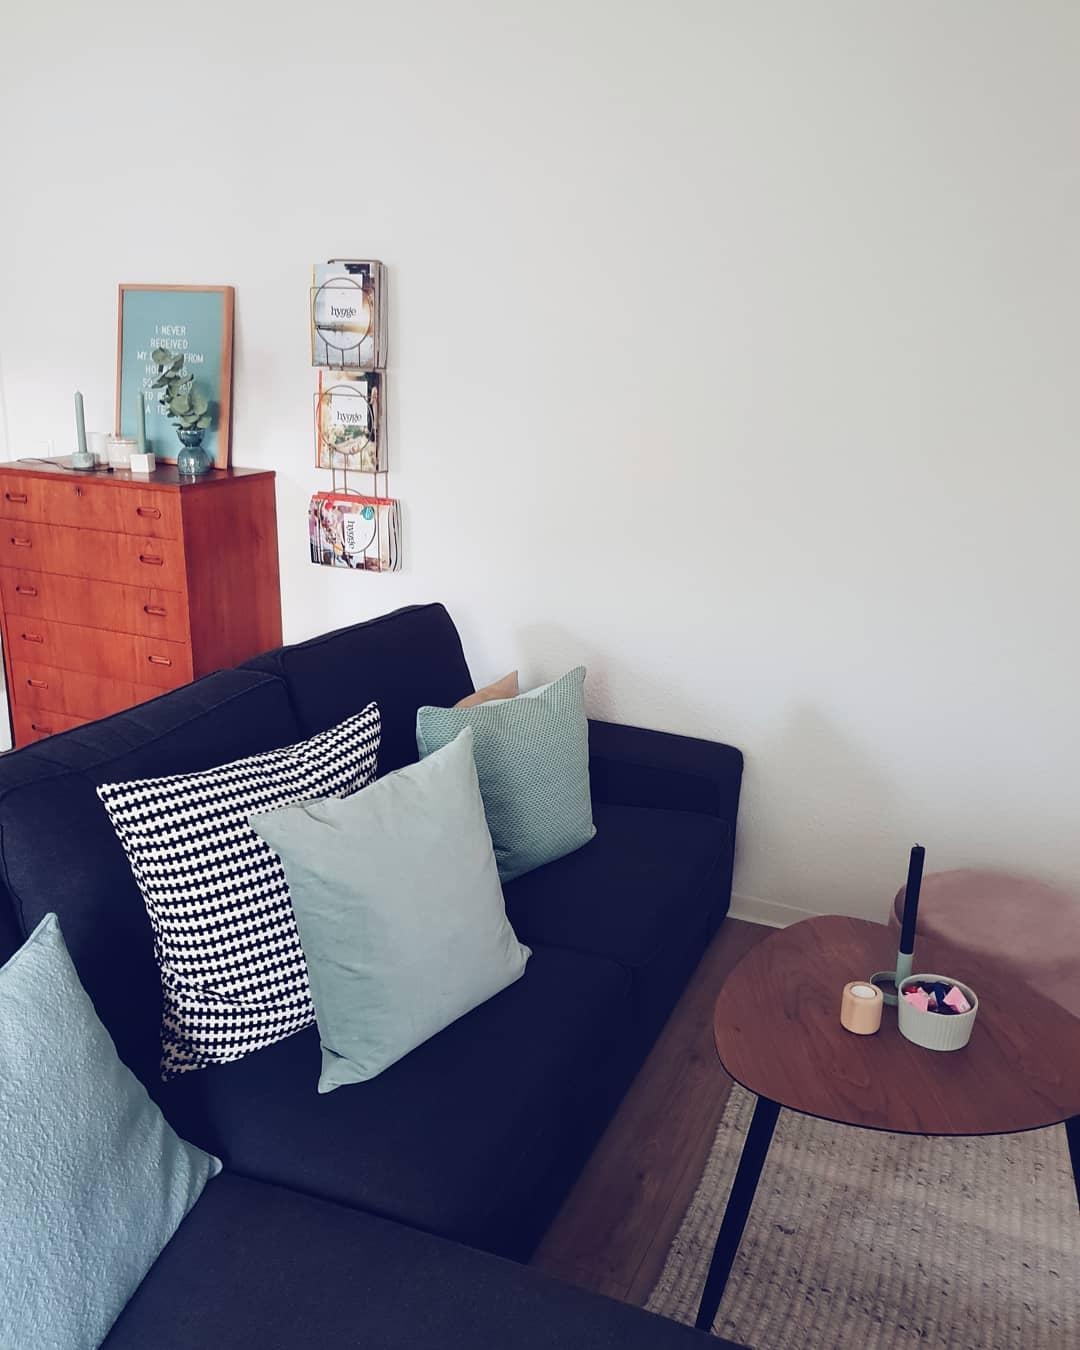 HOME SWEET HOME ❤ #homeinspo #home #livingroom #wohnzimmer #interior #couch #cozyhome #living #pillowtalk #interiorinspo